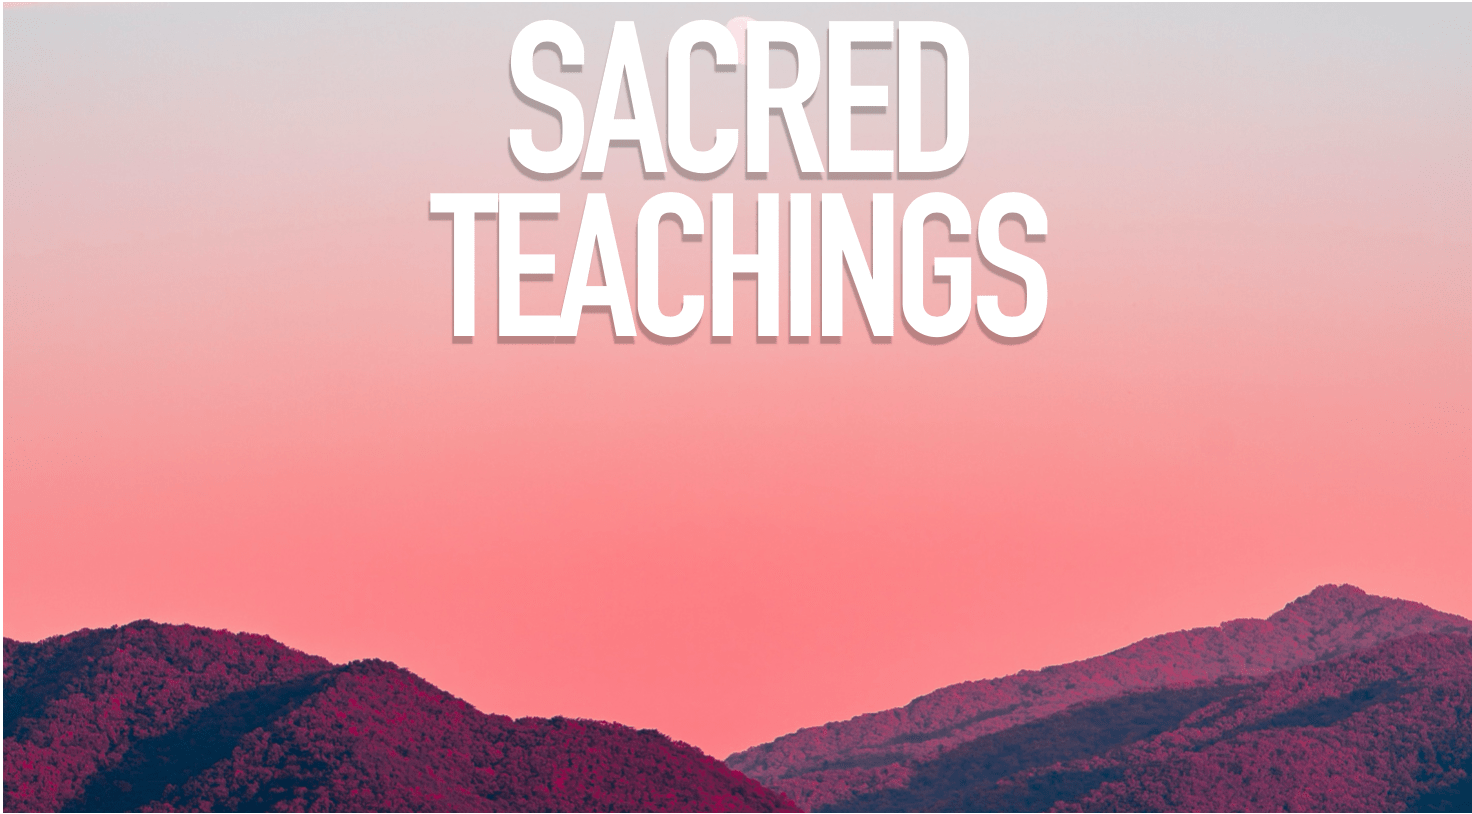 The Sacred Teachings Podcast